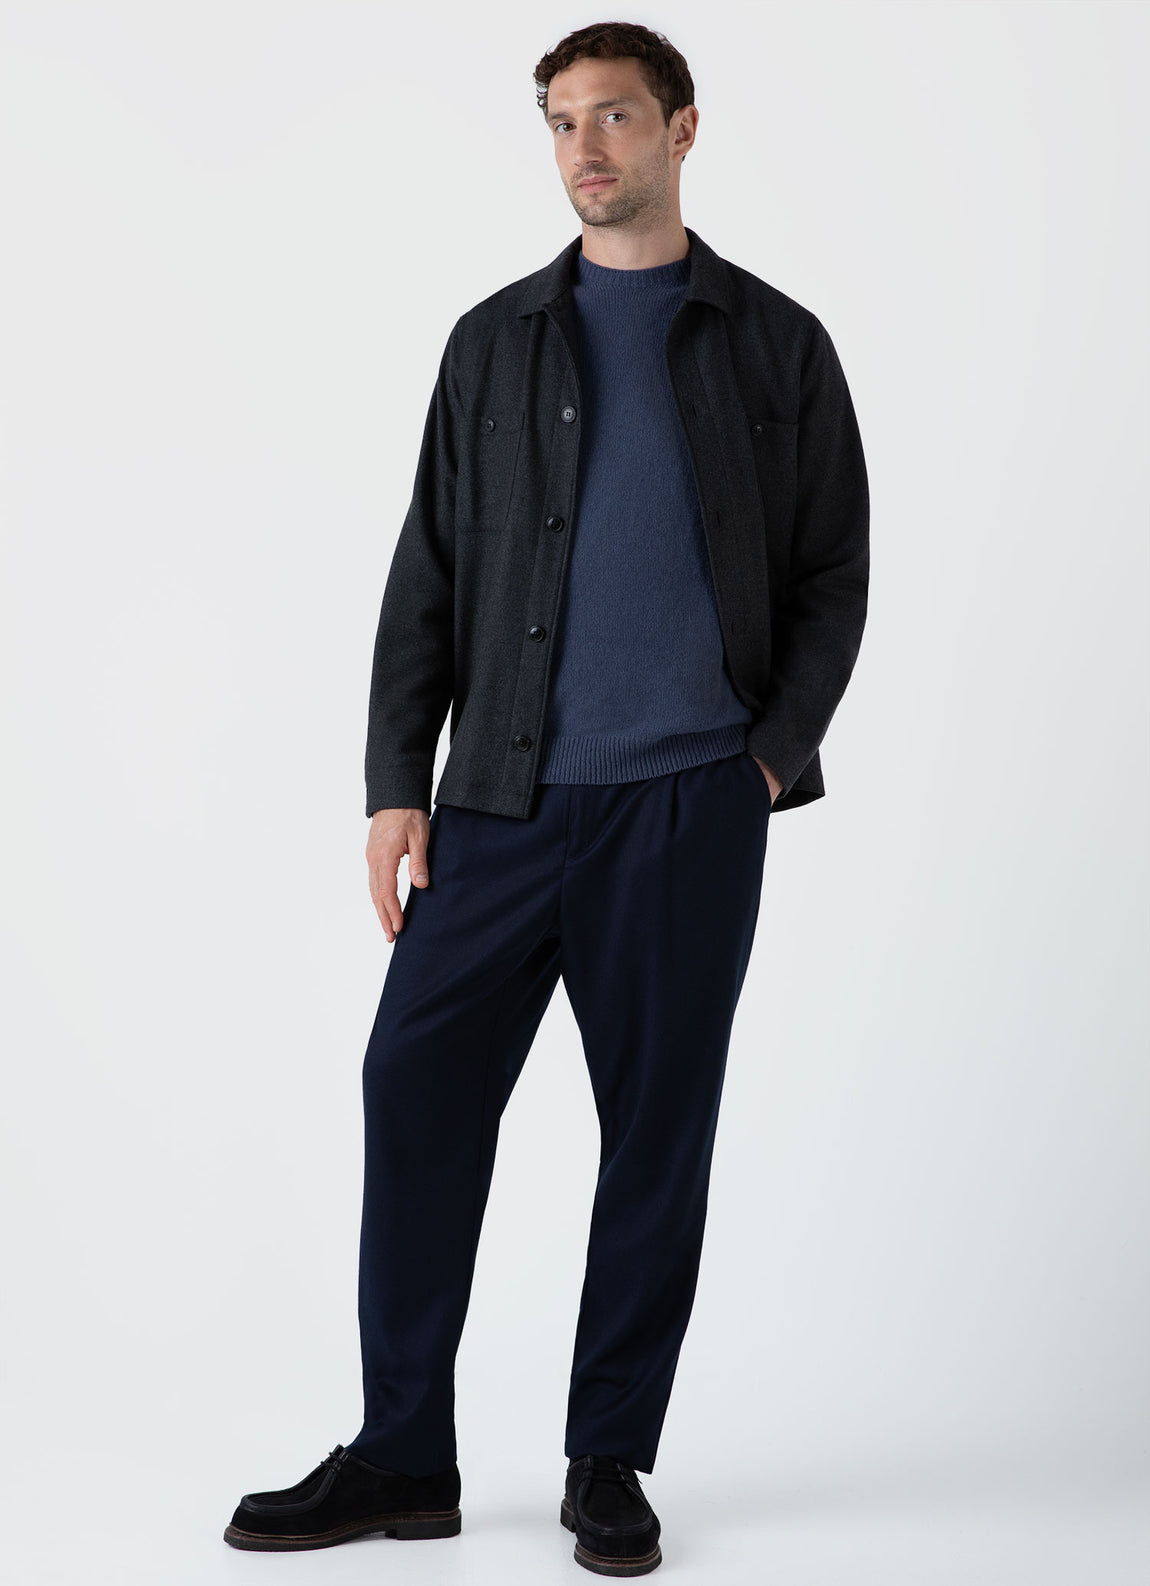 Men's Wool Twill Overshirt in Charcoal Melange | Sunspel